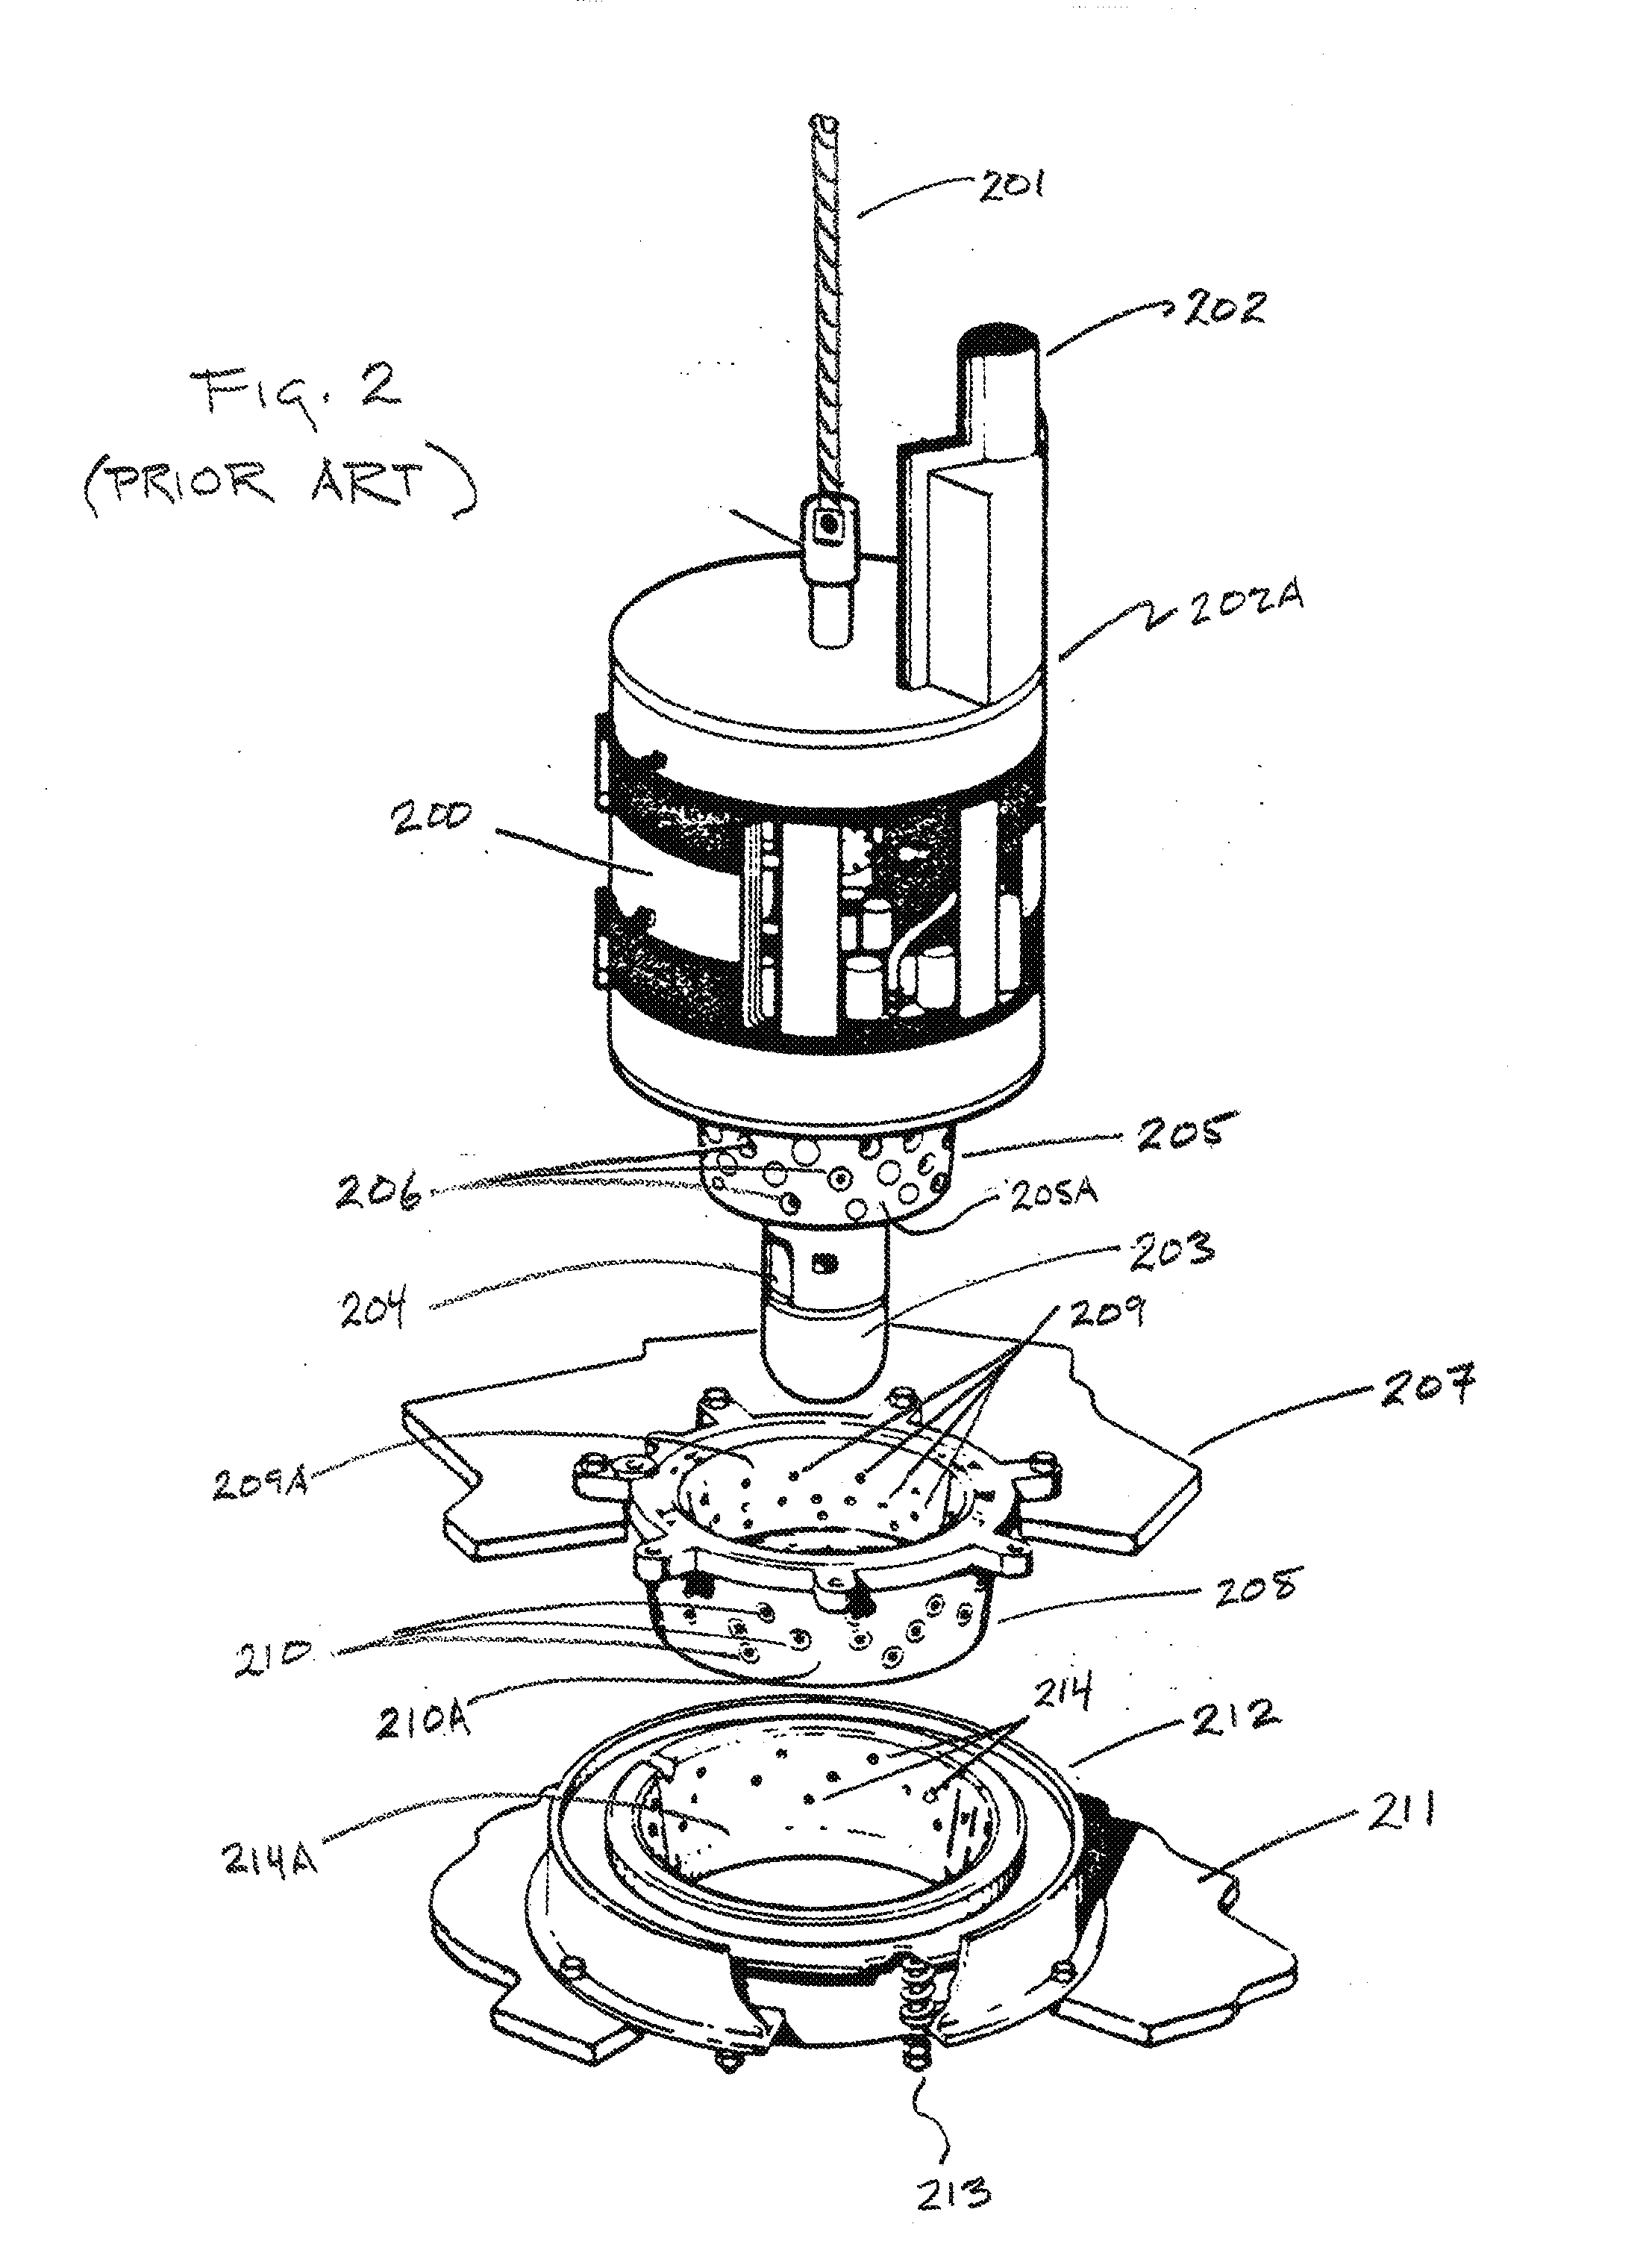 Retrievable hydraulic subsea bop control pod